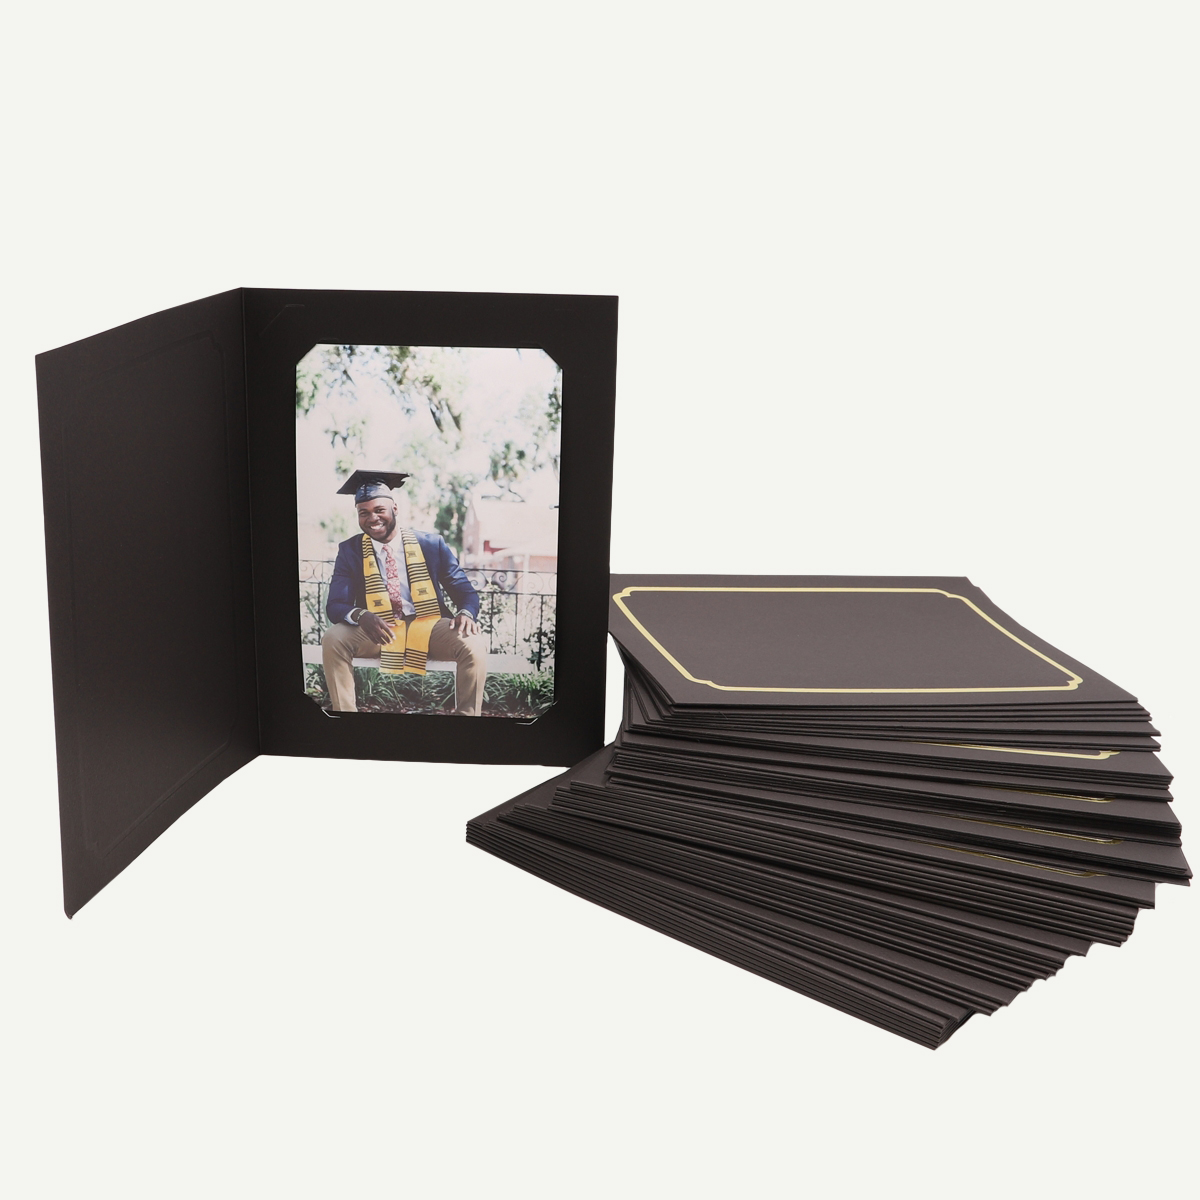 Golden State Art, Pack of 50, 5x7 Paper Photo Folders, Cardboard